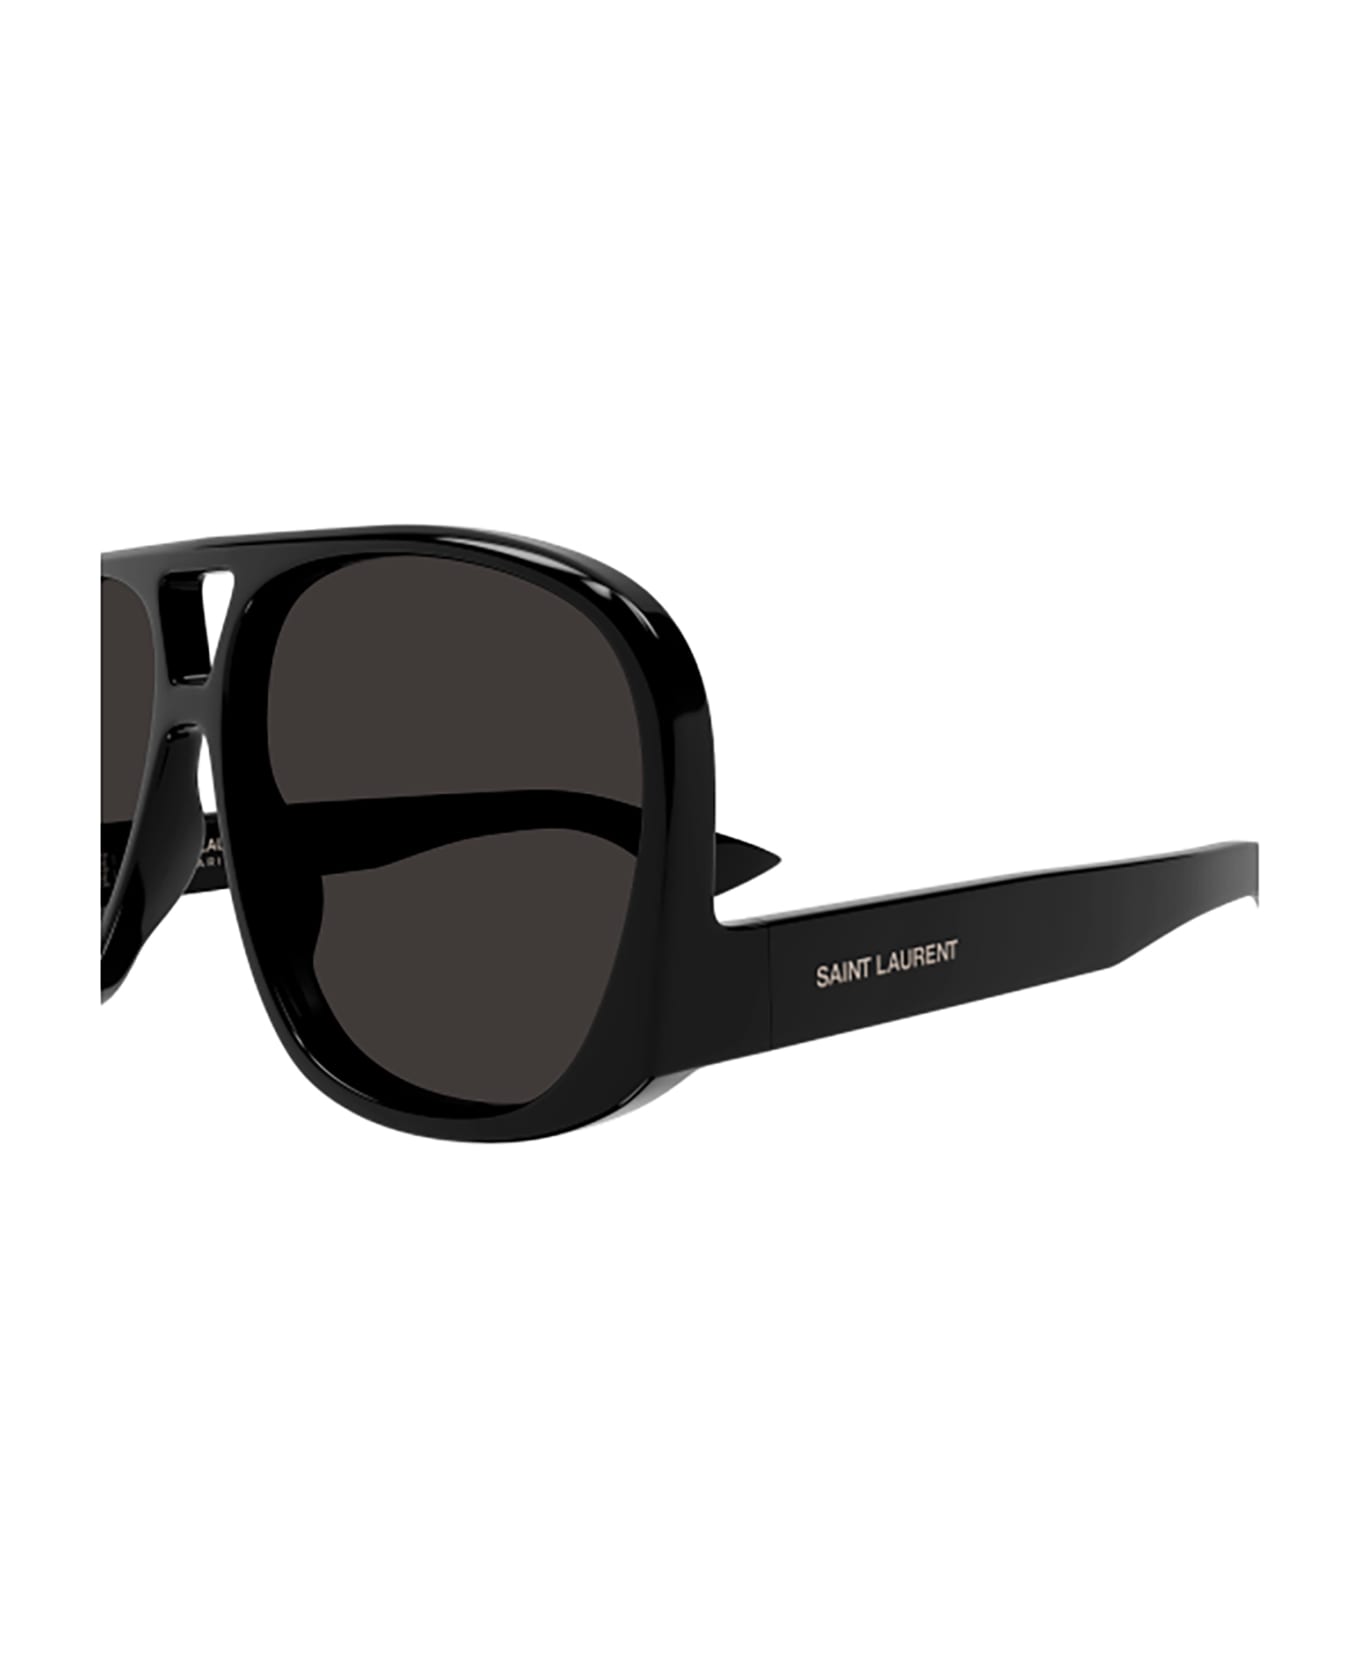 Saint Laurent Eyewear Sl 652 Solace Sunglasses - 001 black black black